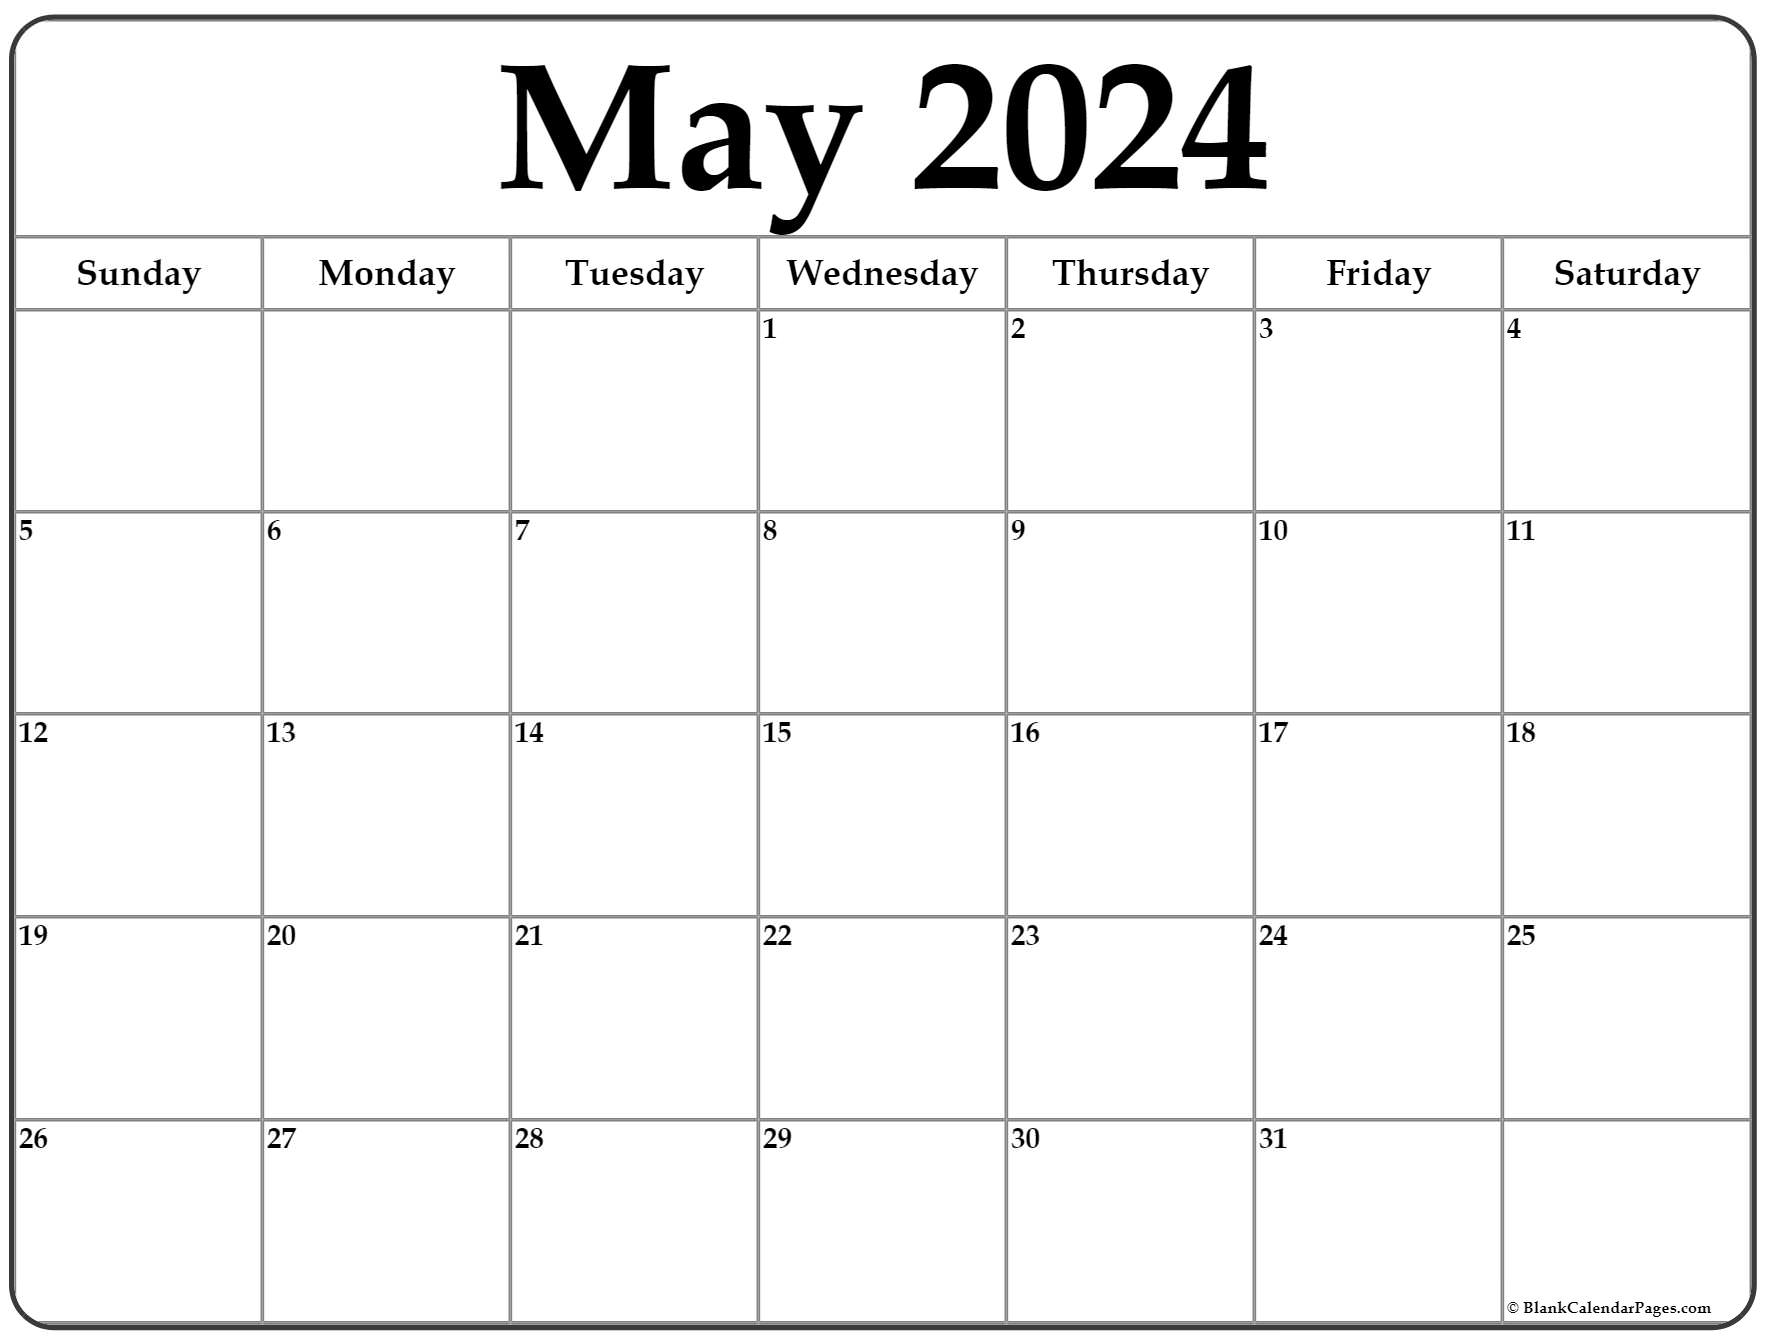 Pdf May 2022 Calendar May 2022 Calendar | Free Printable Calendar Templates